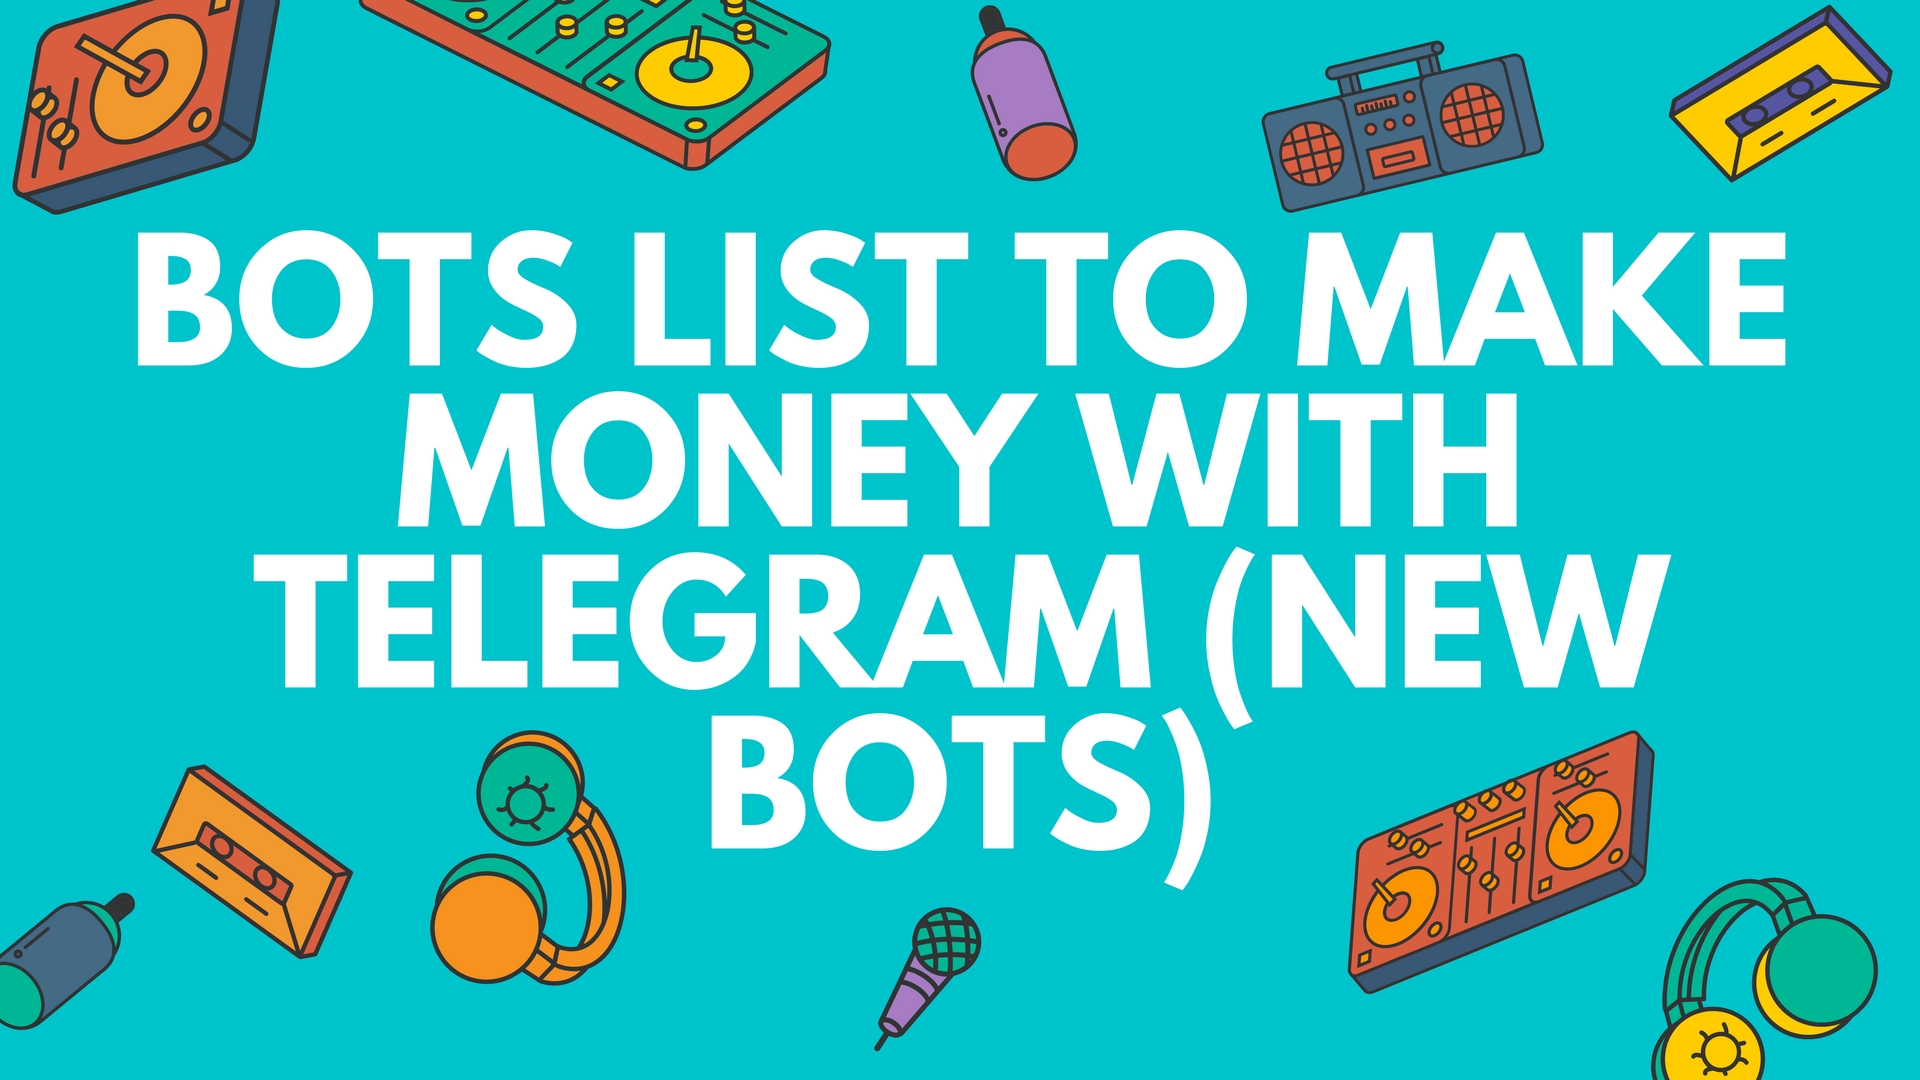 Bots List To Make Money With Telegram New Bots Steemit - 